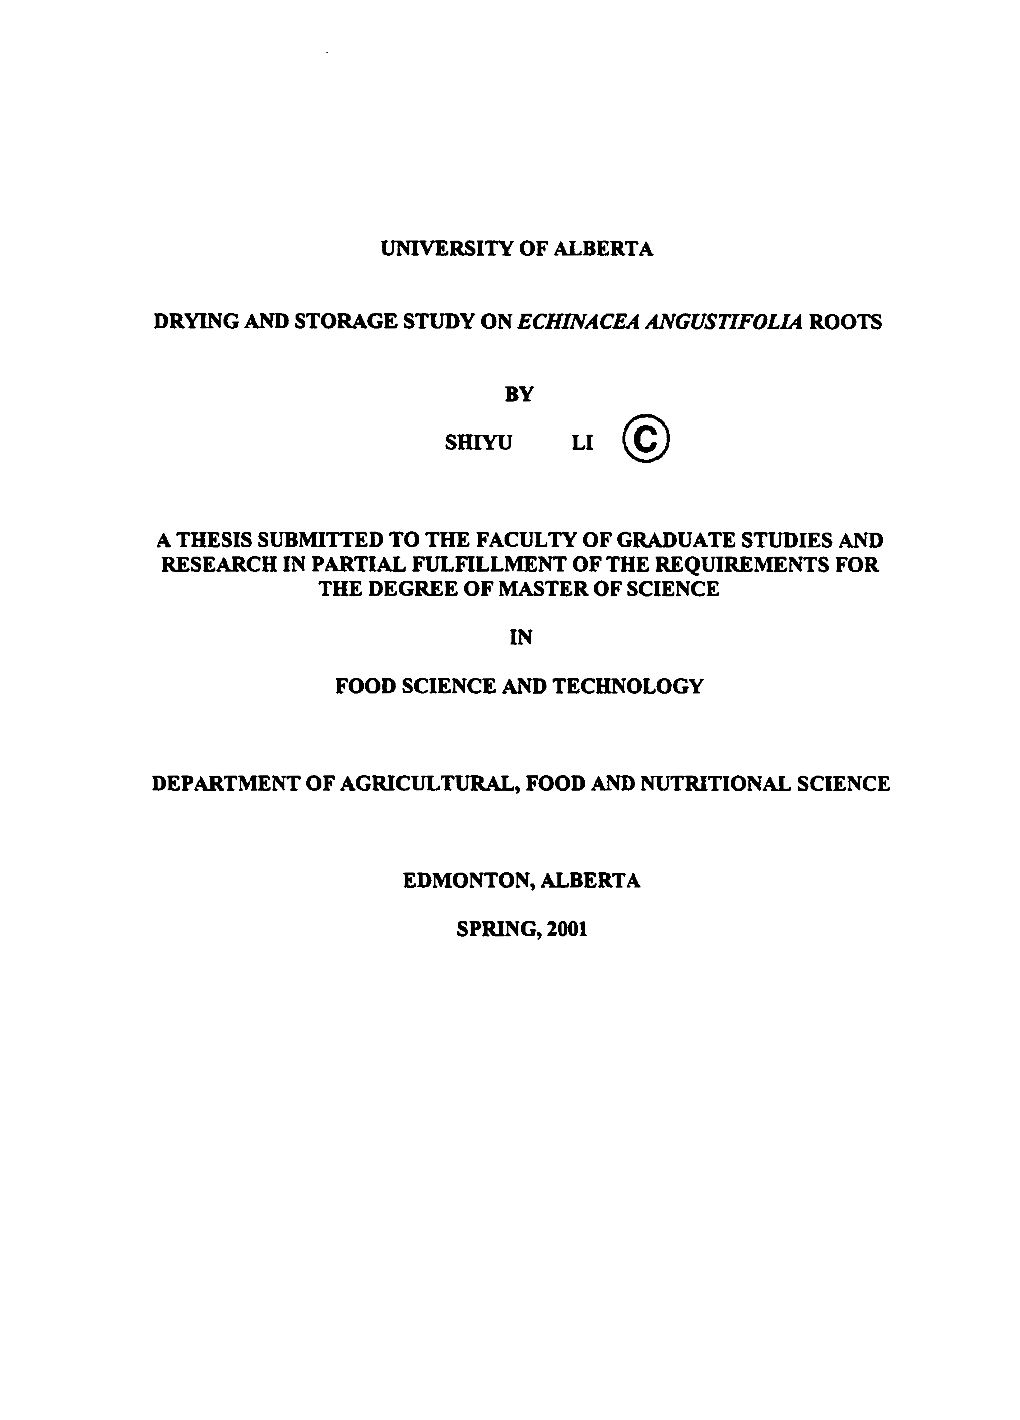 University of Alberta Drying and Storage Study on Ech